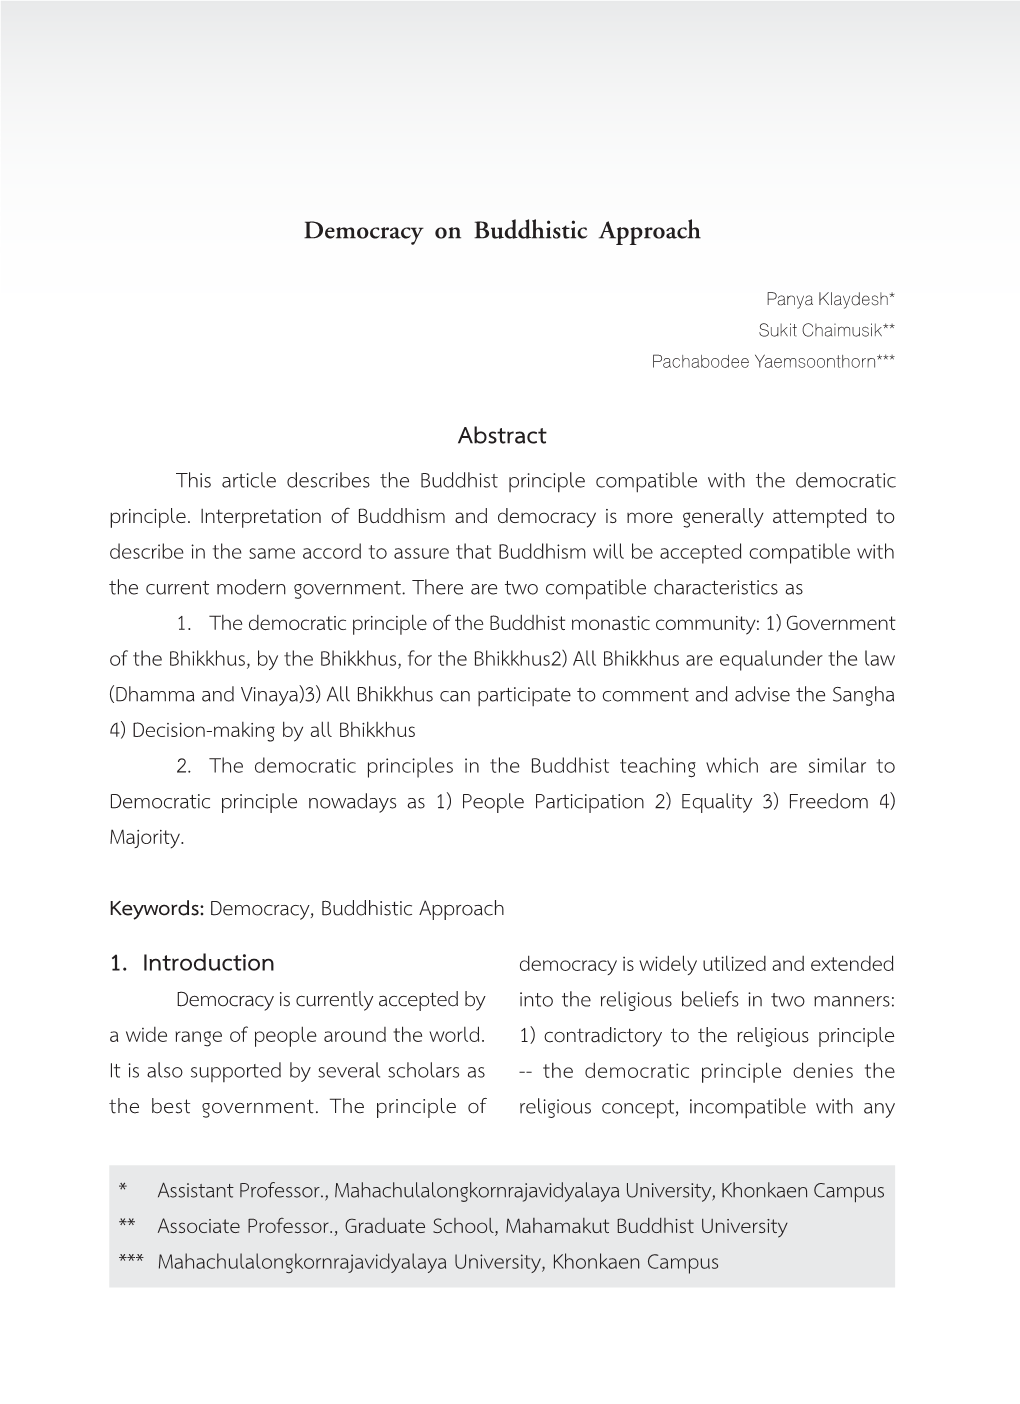 Democracy on Buddhistic Approach